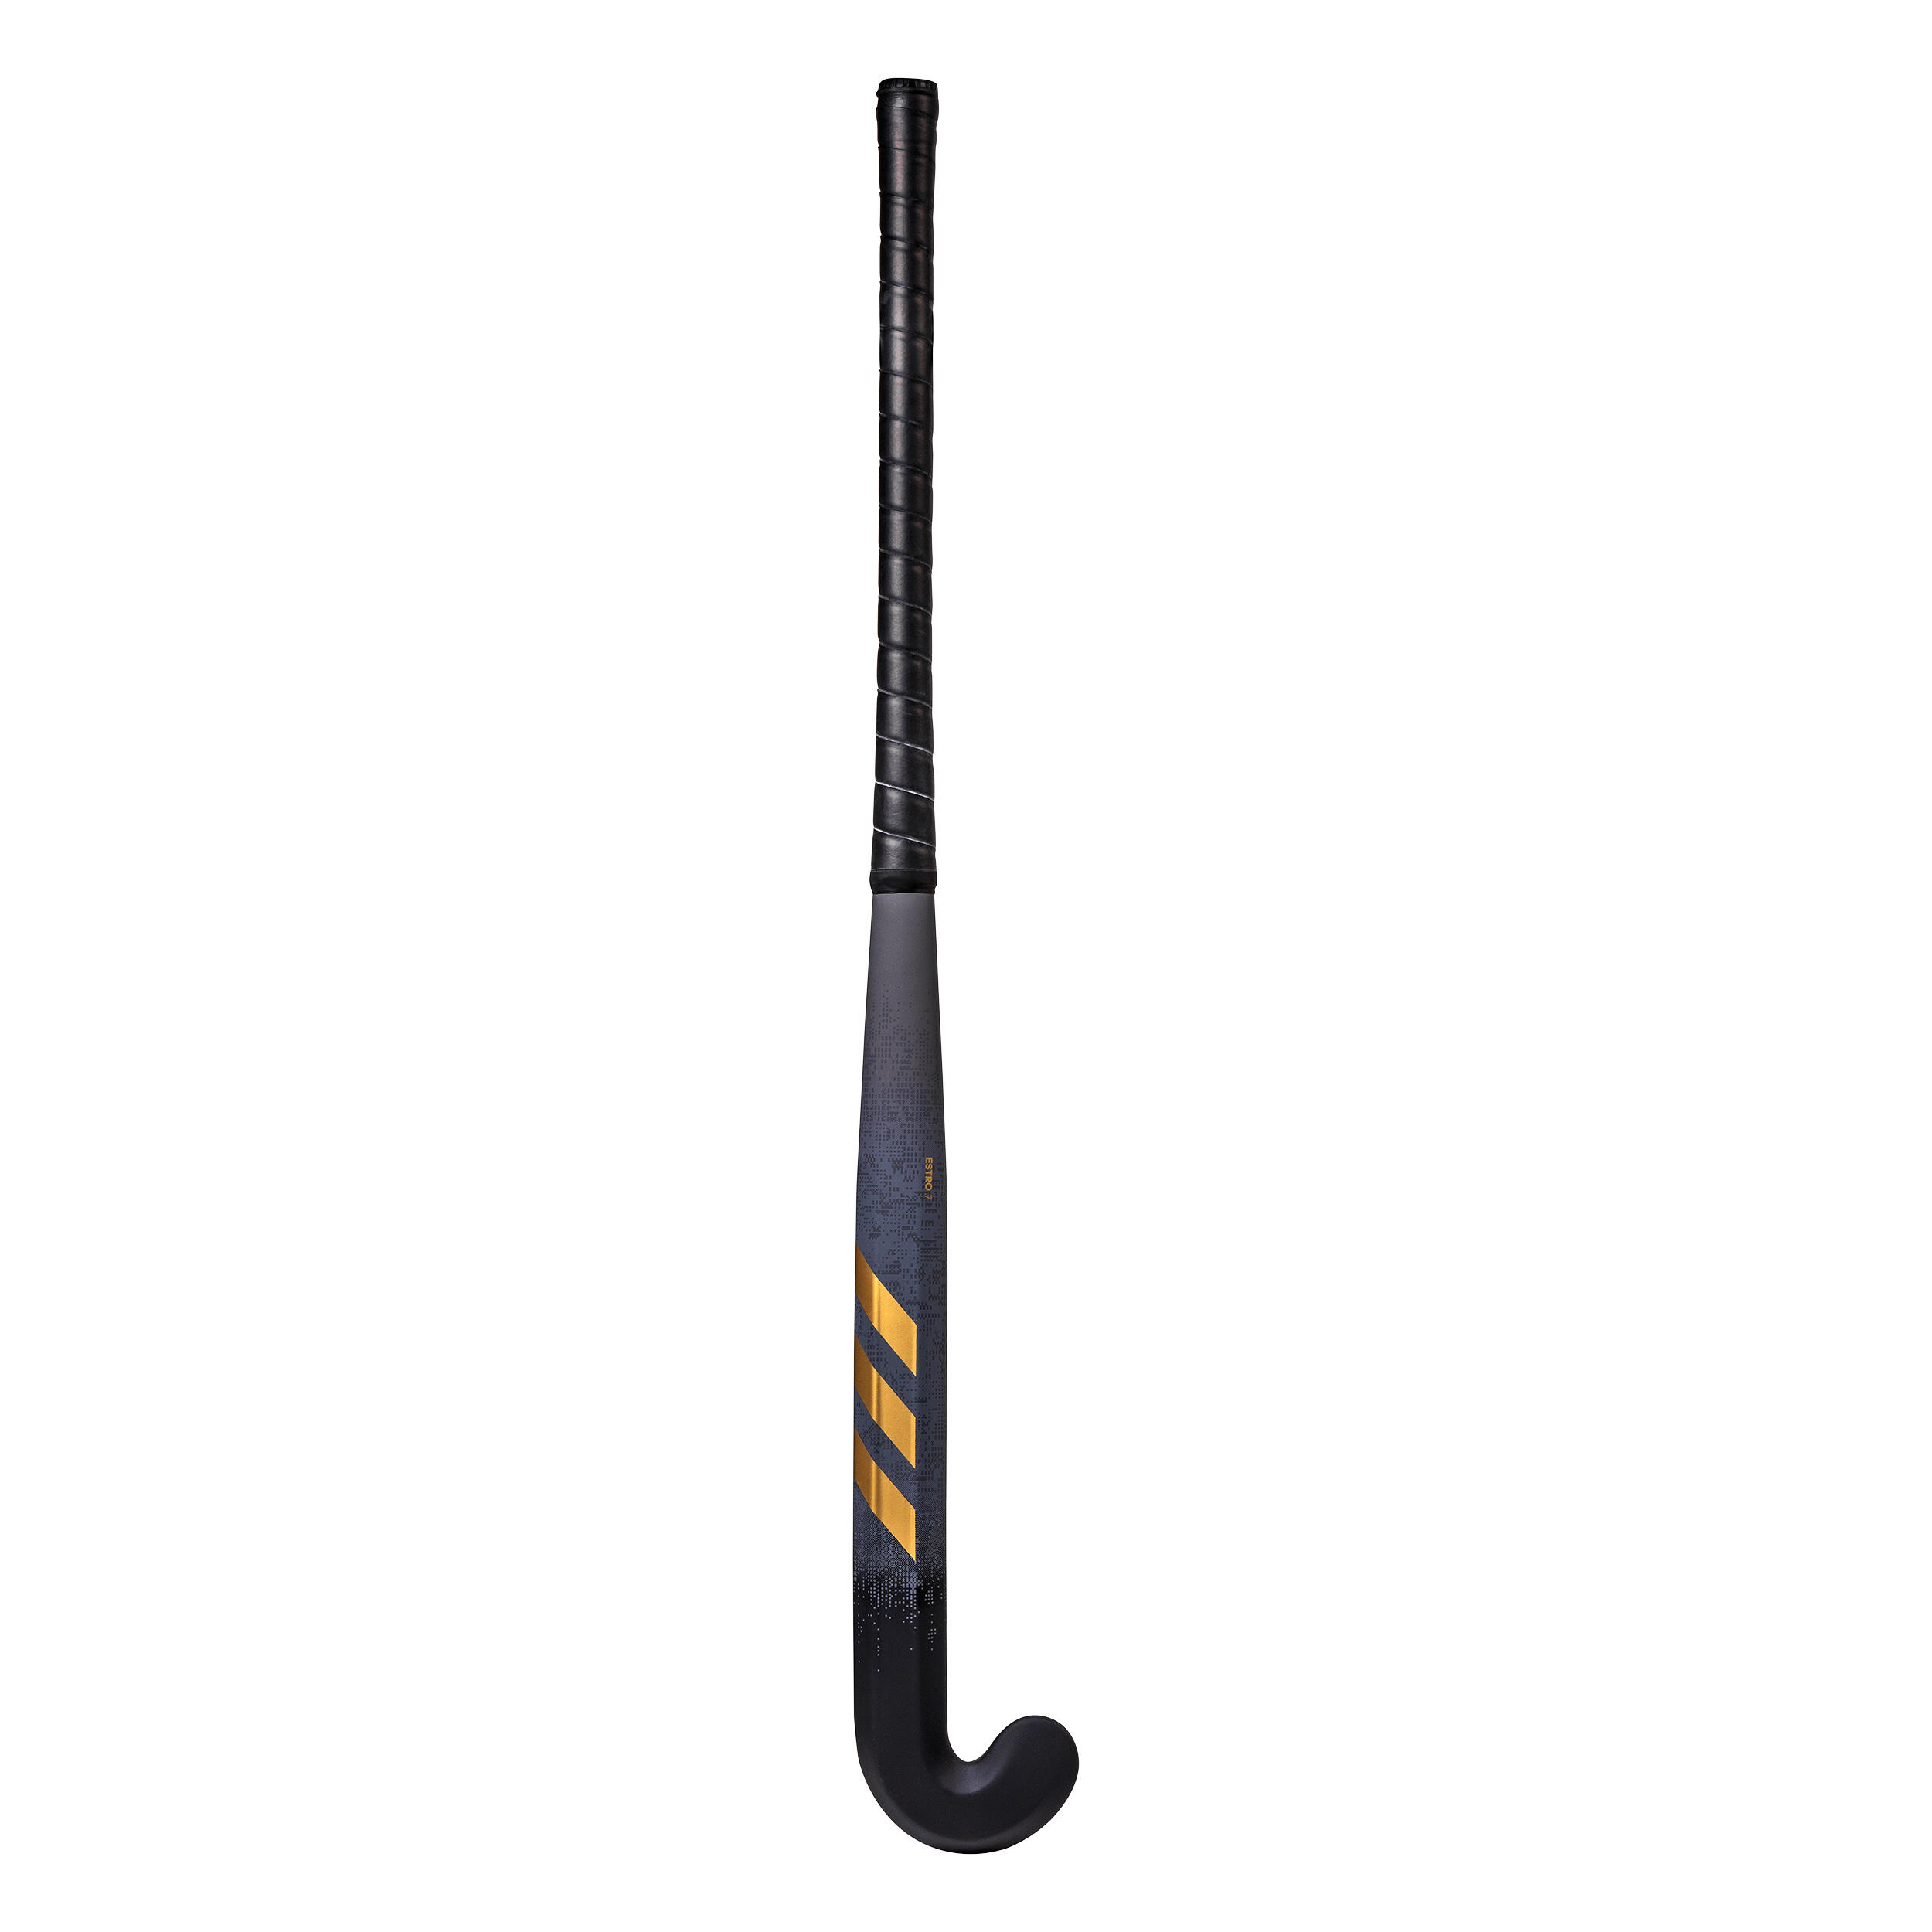 Adult Intermediate 20% Carbon Mid Bow Field Hockey Stick Estro .7 - Black/GoldBlack and gold 10/13